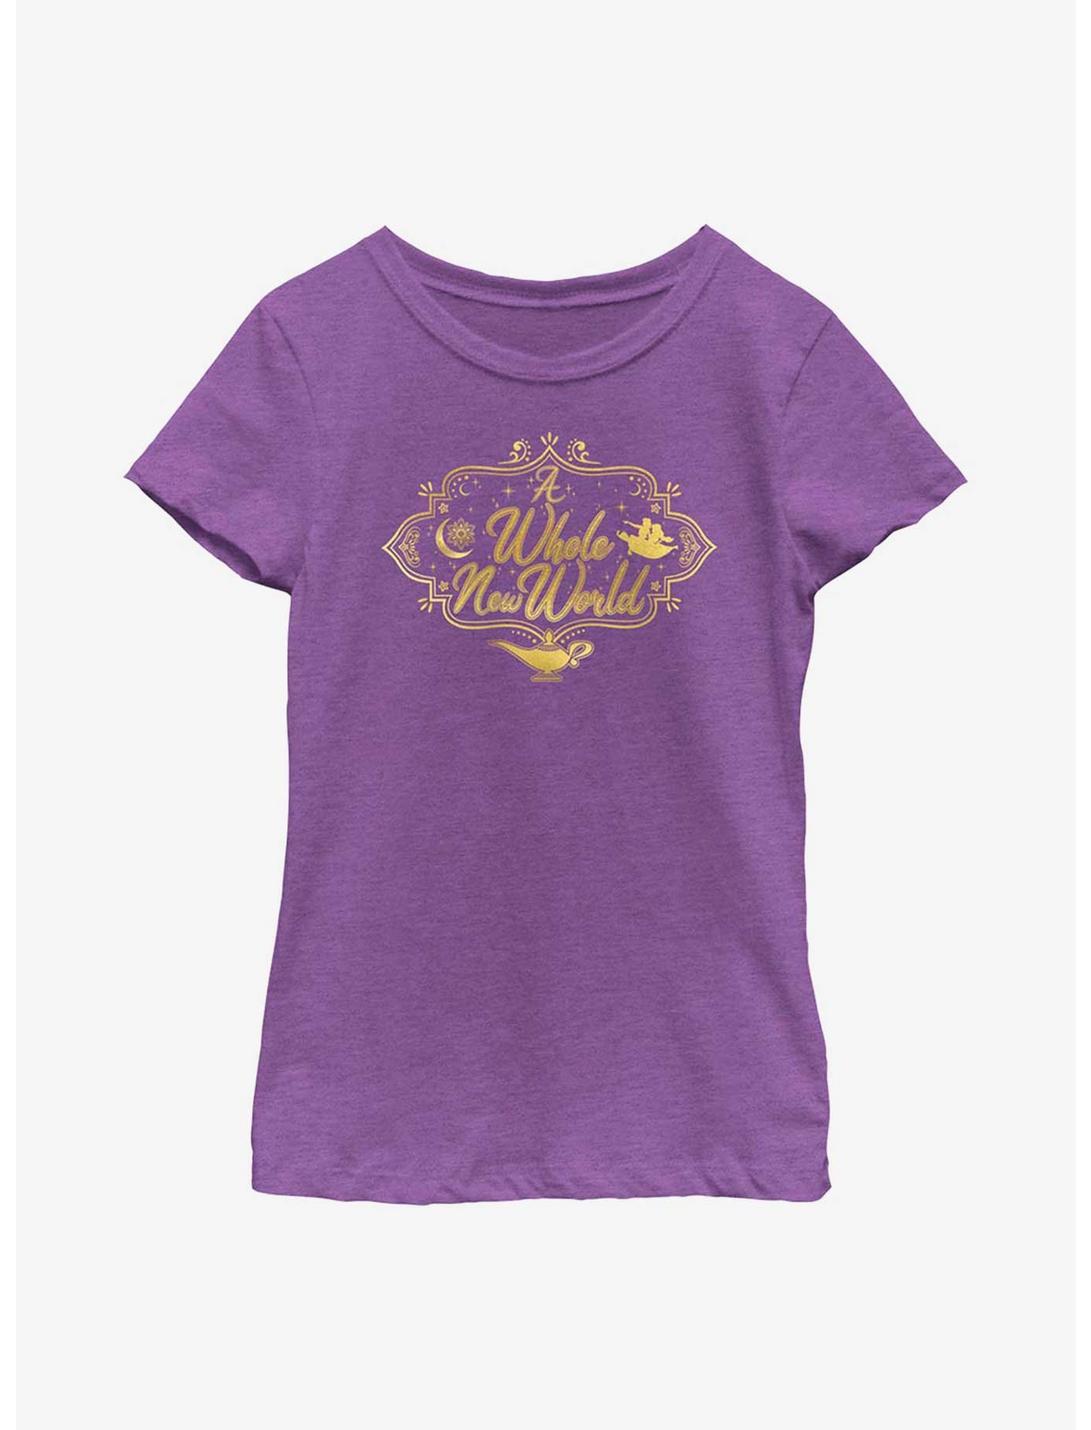 Disney Aladdin 30th Anniversary A Whole New World Youth Girls T-Shirt, PURPLE BERRY, hi-res